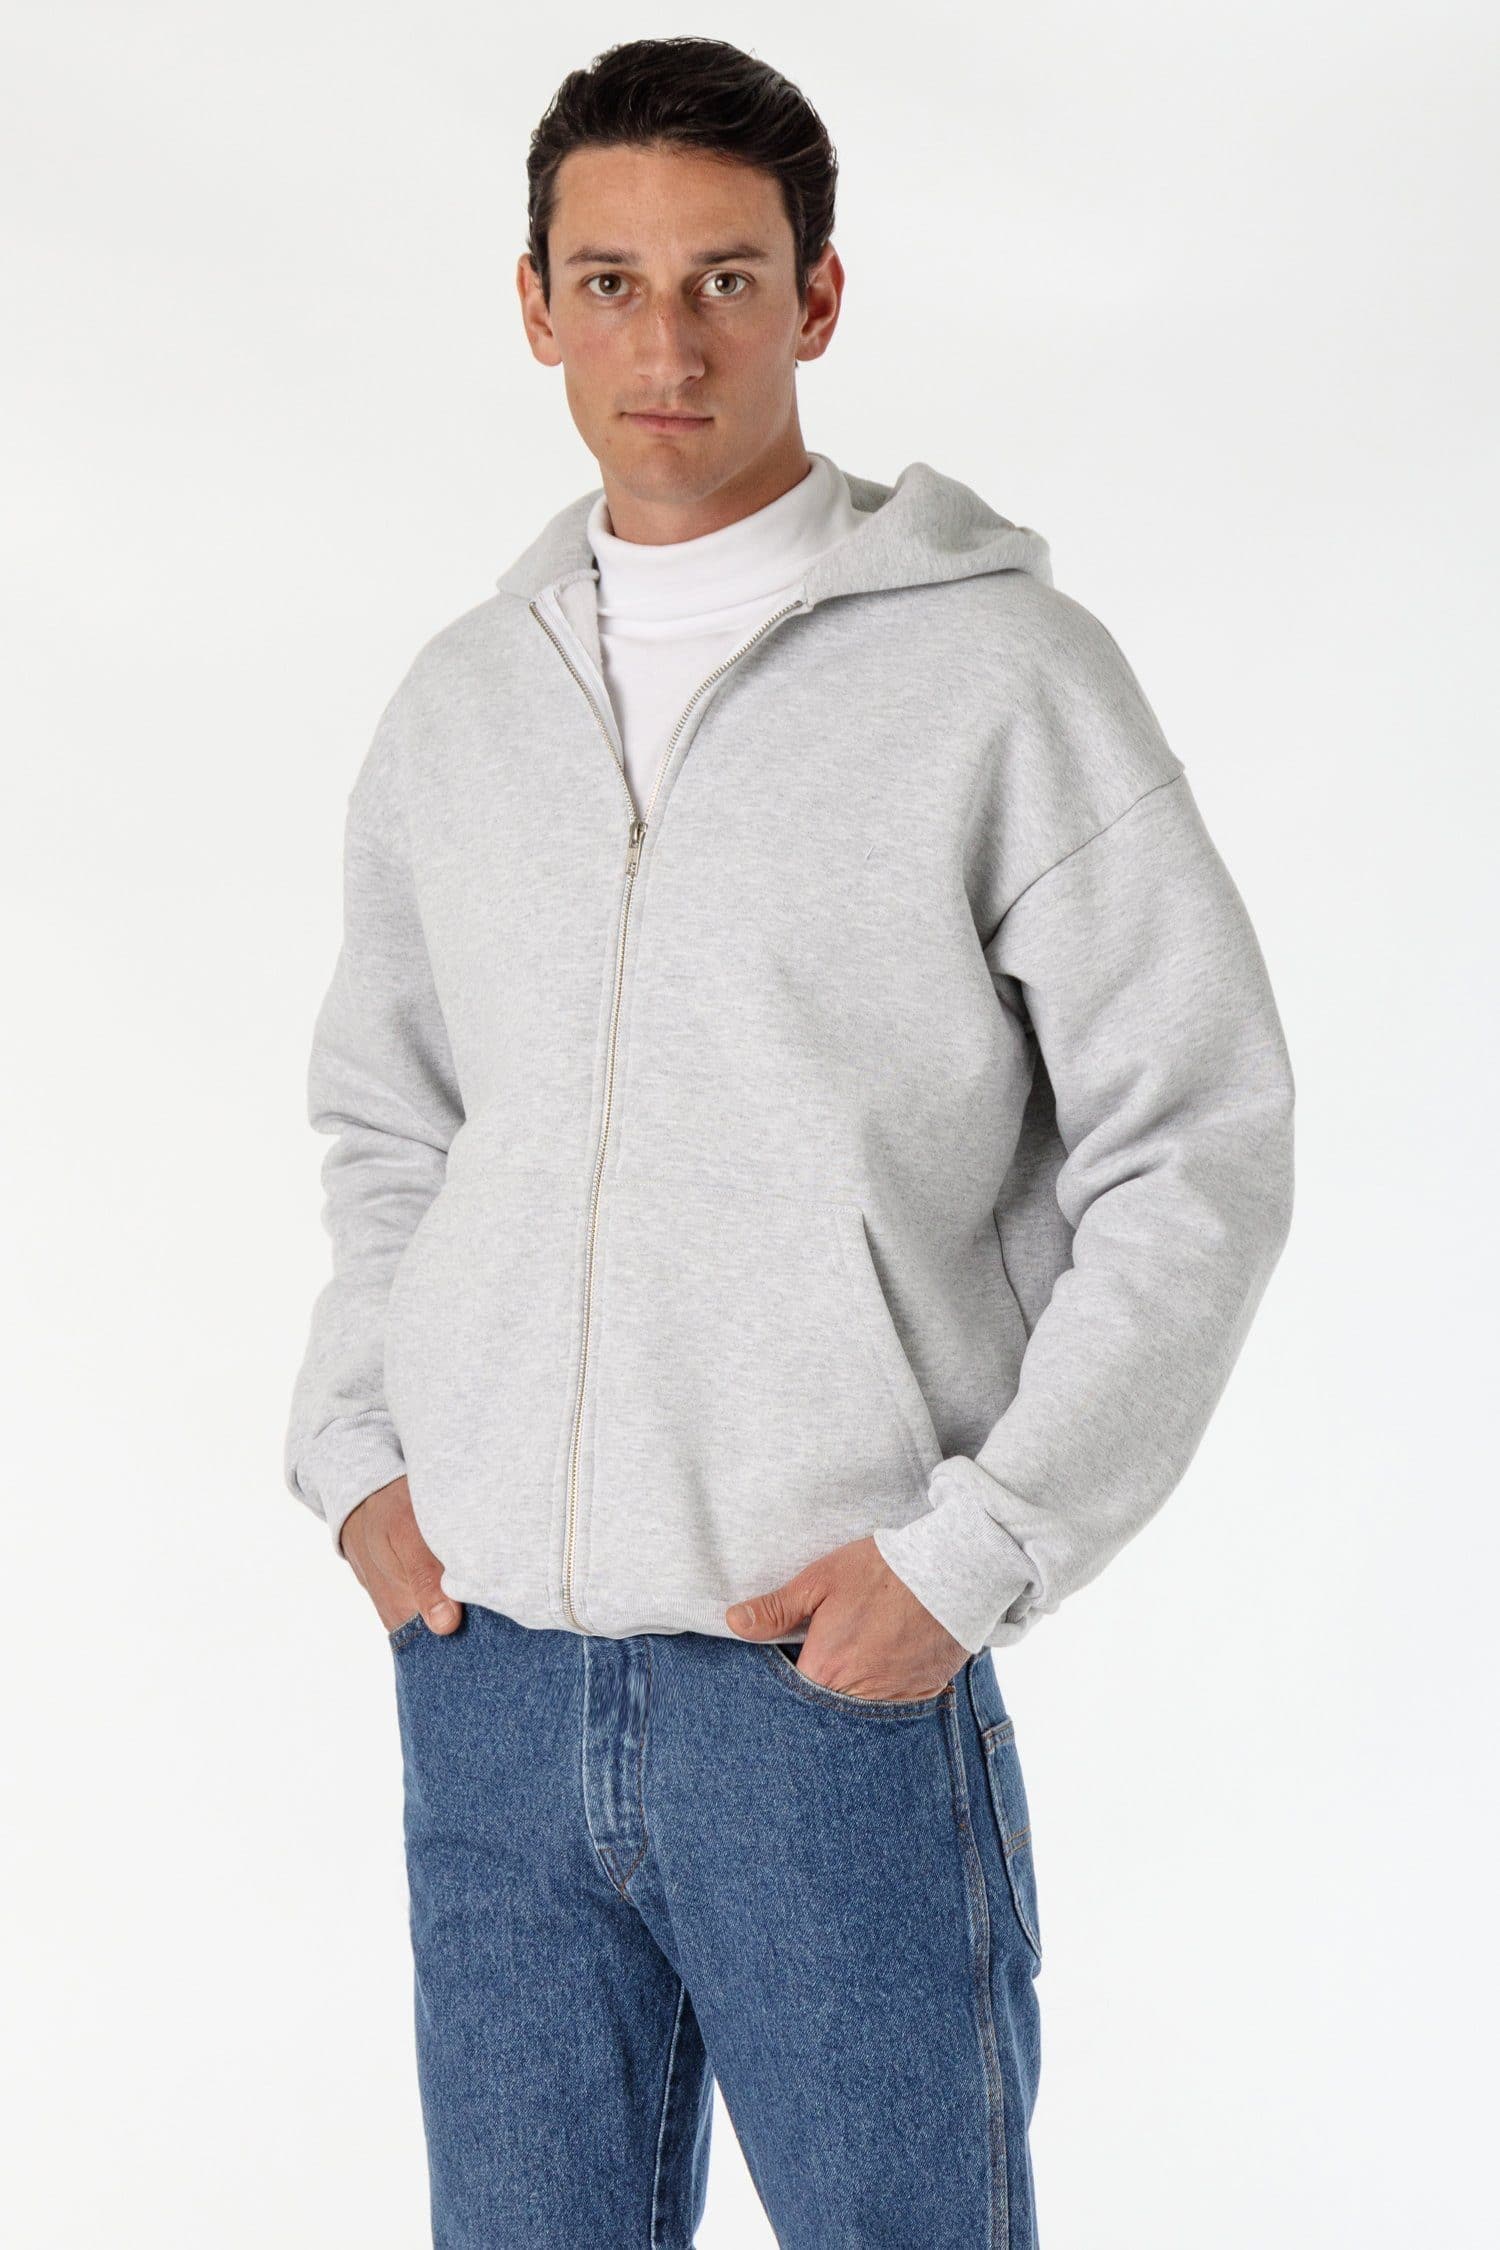 HF-10 Mix - 14oz. Heavy Fleece Zip Up Hooded Sweatshirt – Los